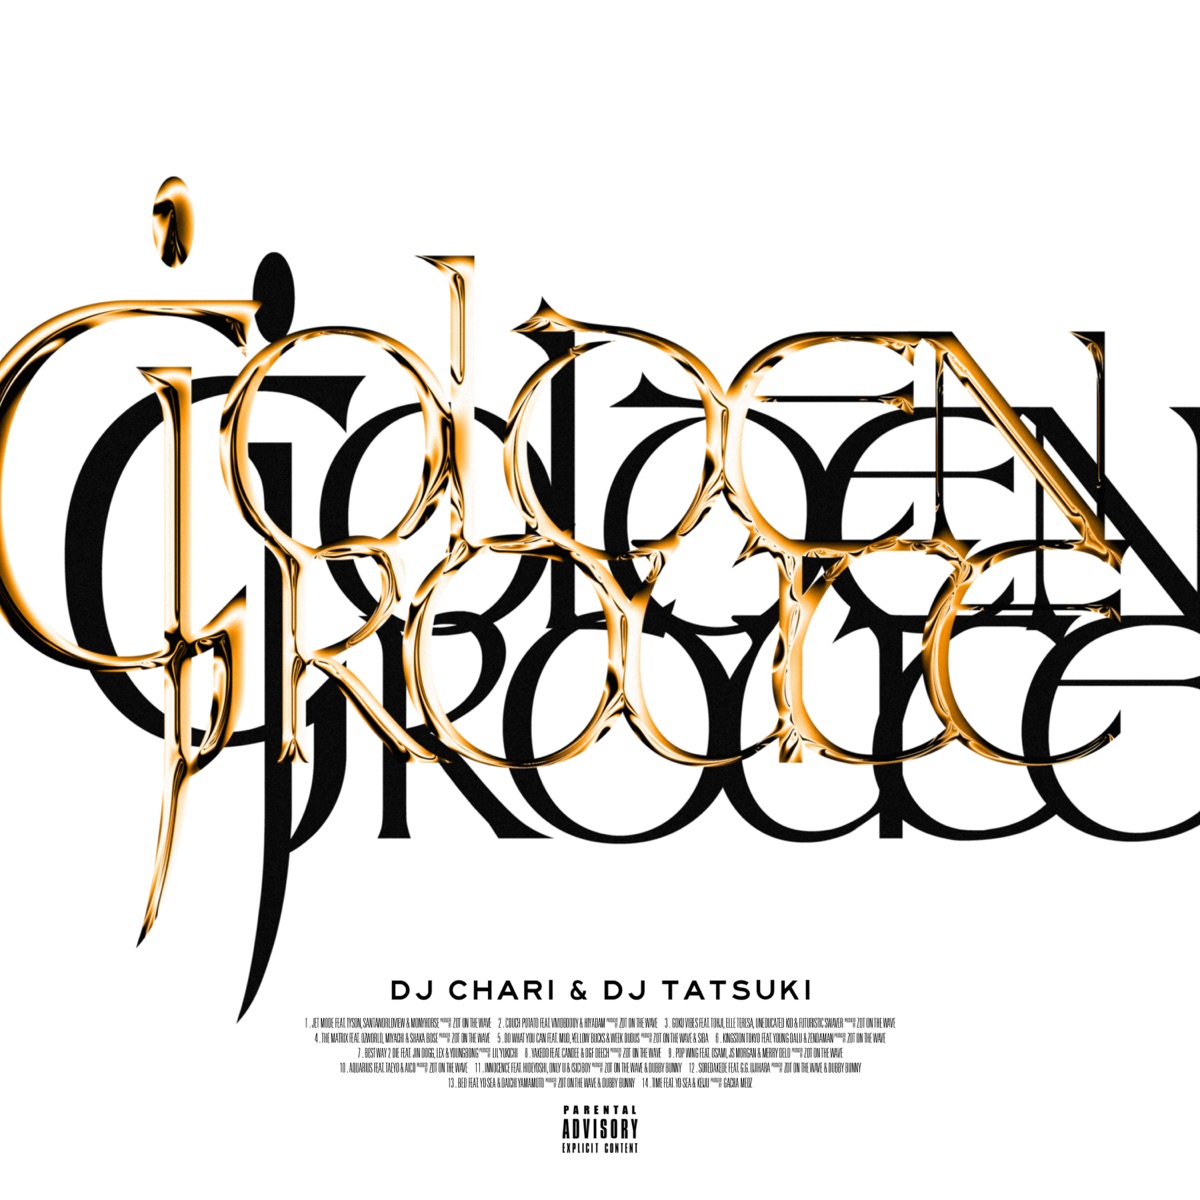 『DJ CHARI & DJ TATSUKI - YAKEDO (feat. Candee & OGF Deech)』収録の『GOLDEN ROUTE』ジャケット